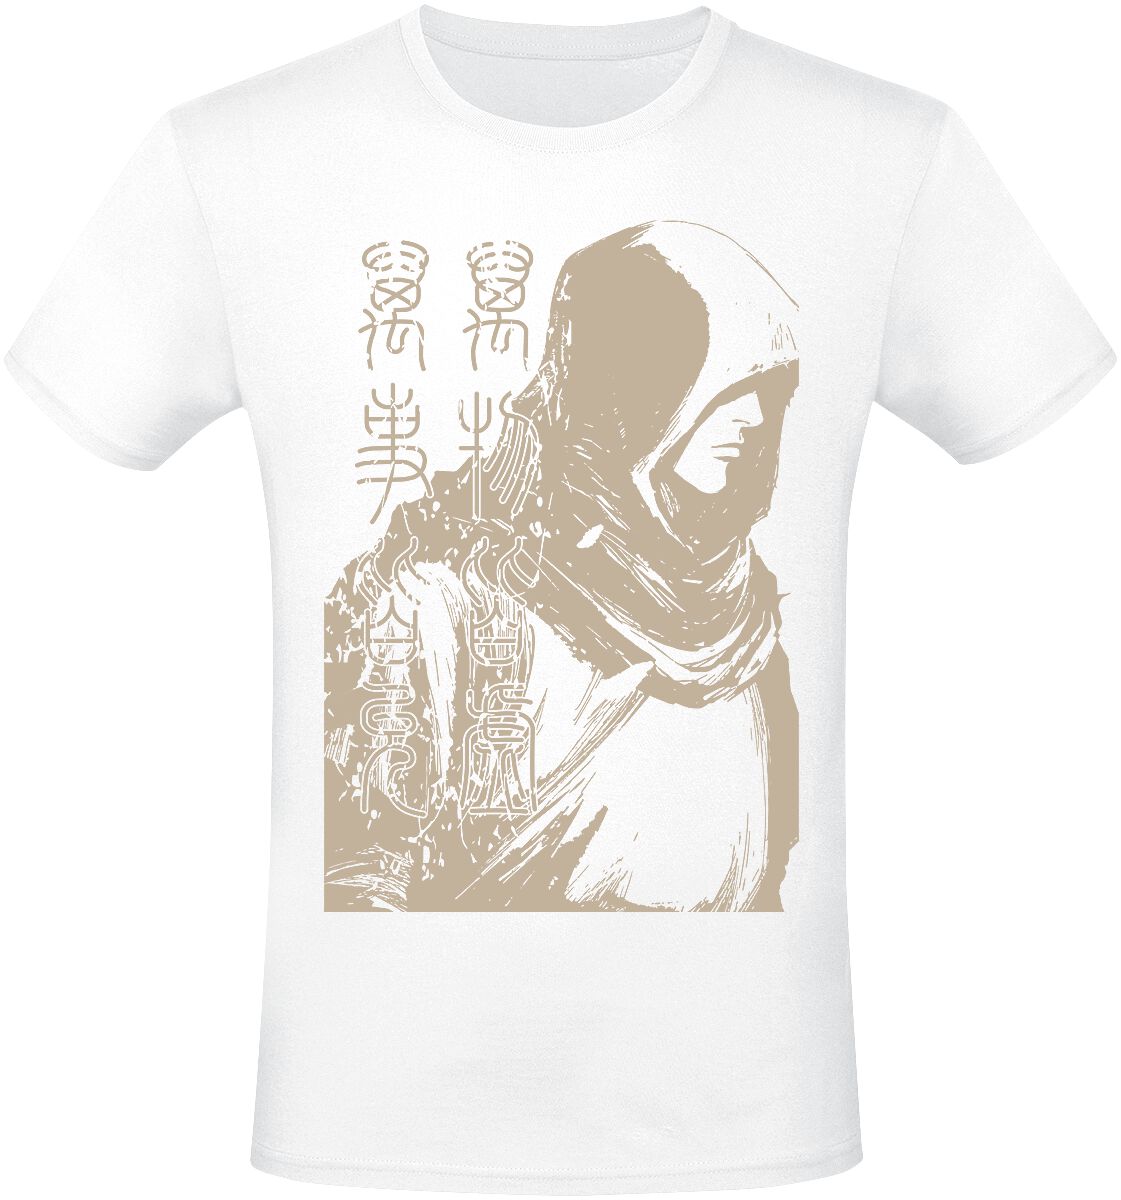 Assassin's Creed Dynasty - Assassin T-Shirt white